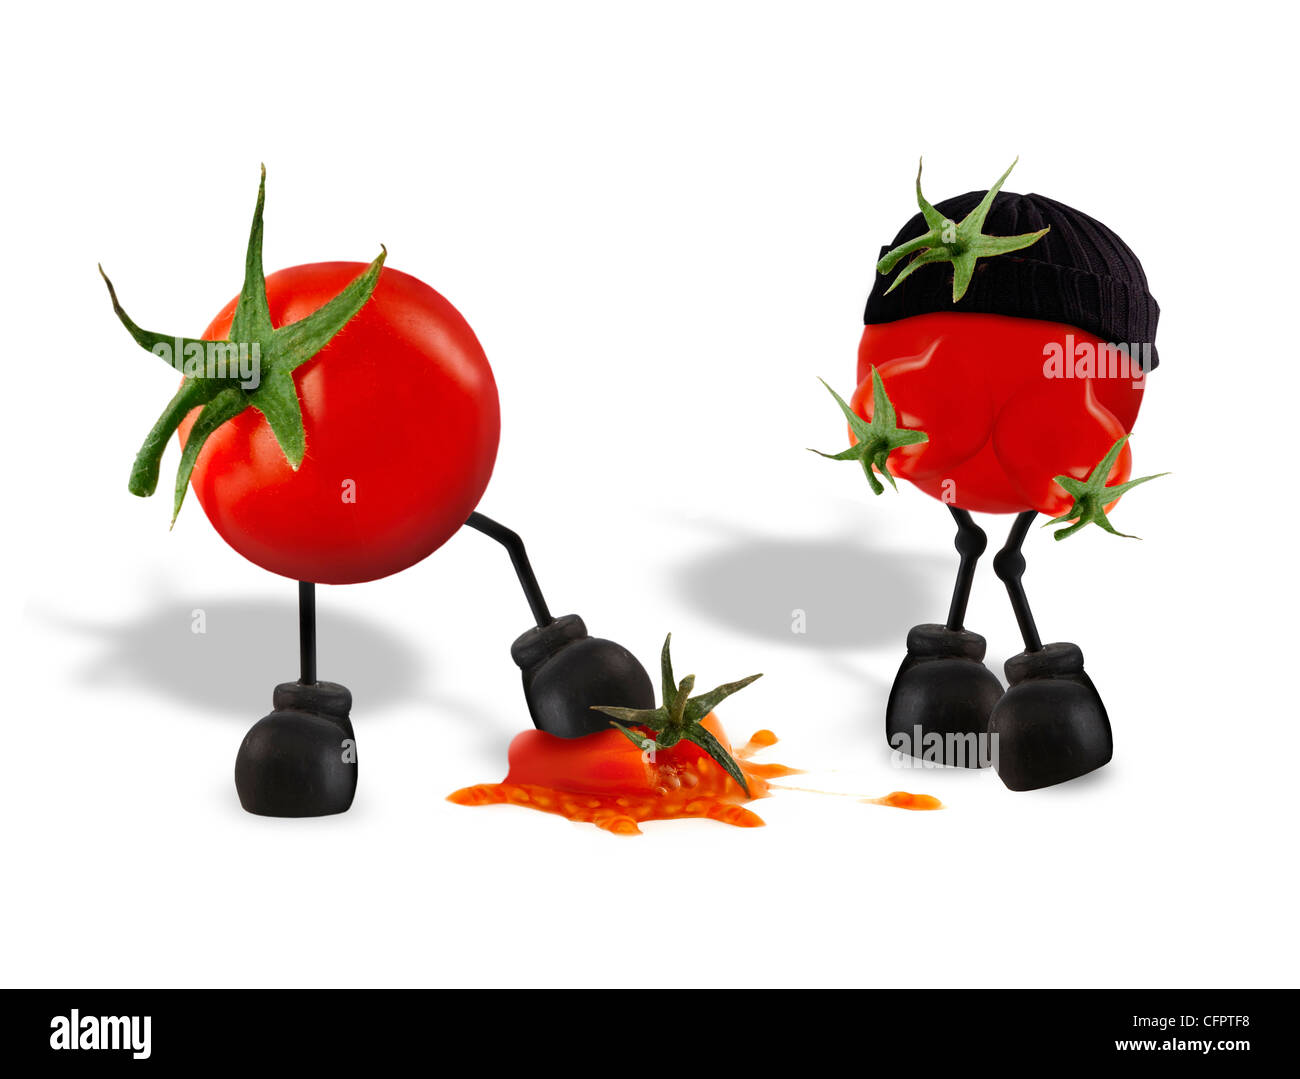 Funny tomatoes illustration Stock Photo